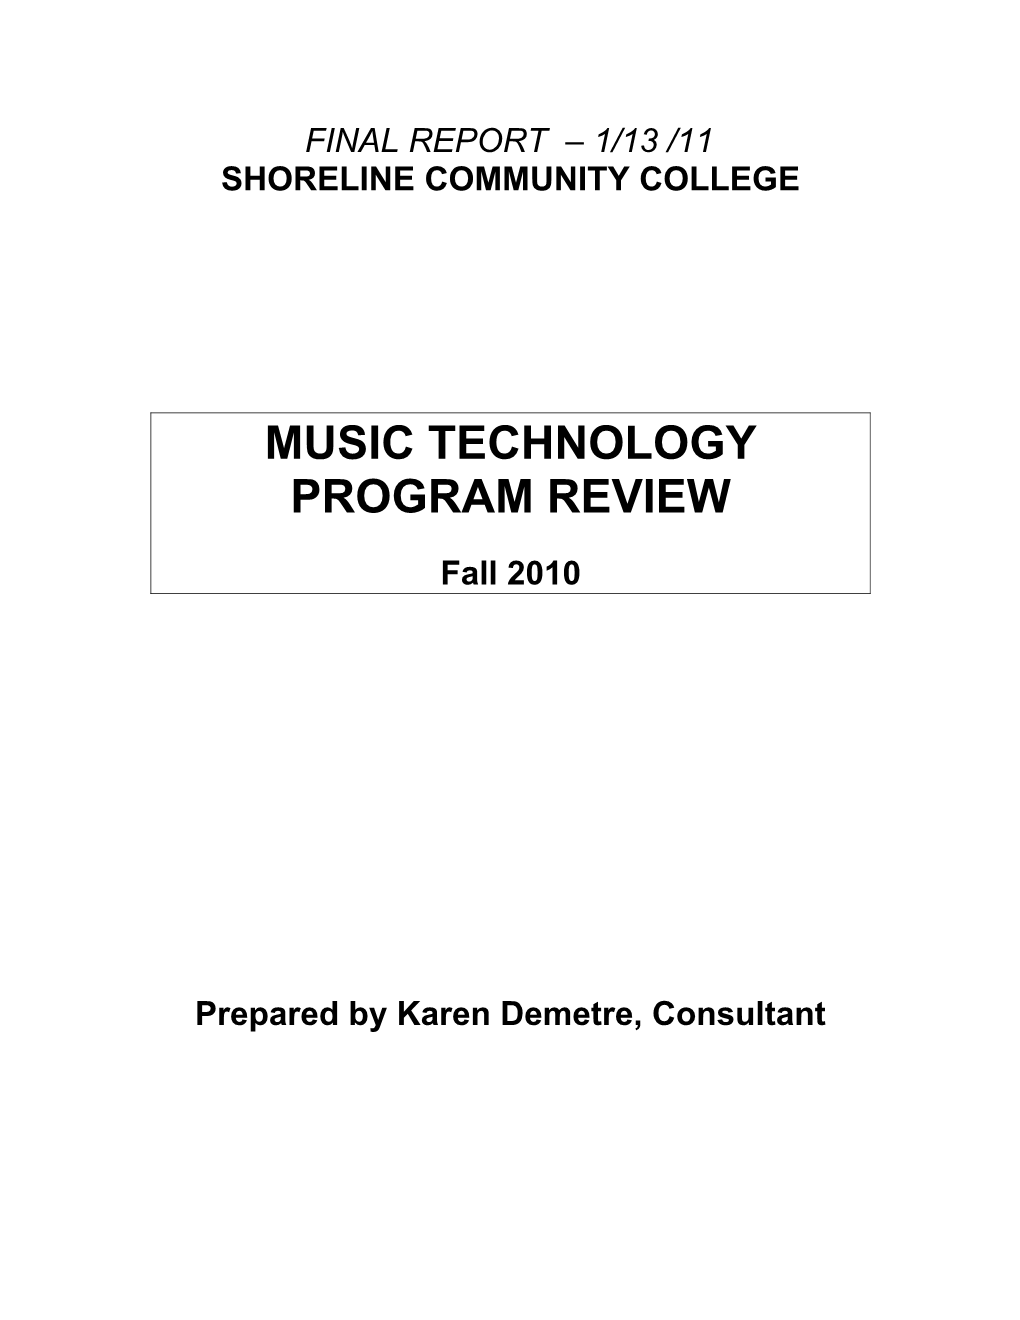 Program Review Report Spring 2010 s1